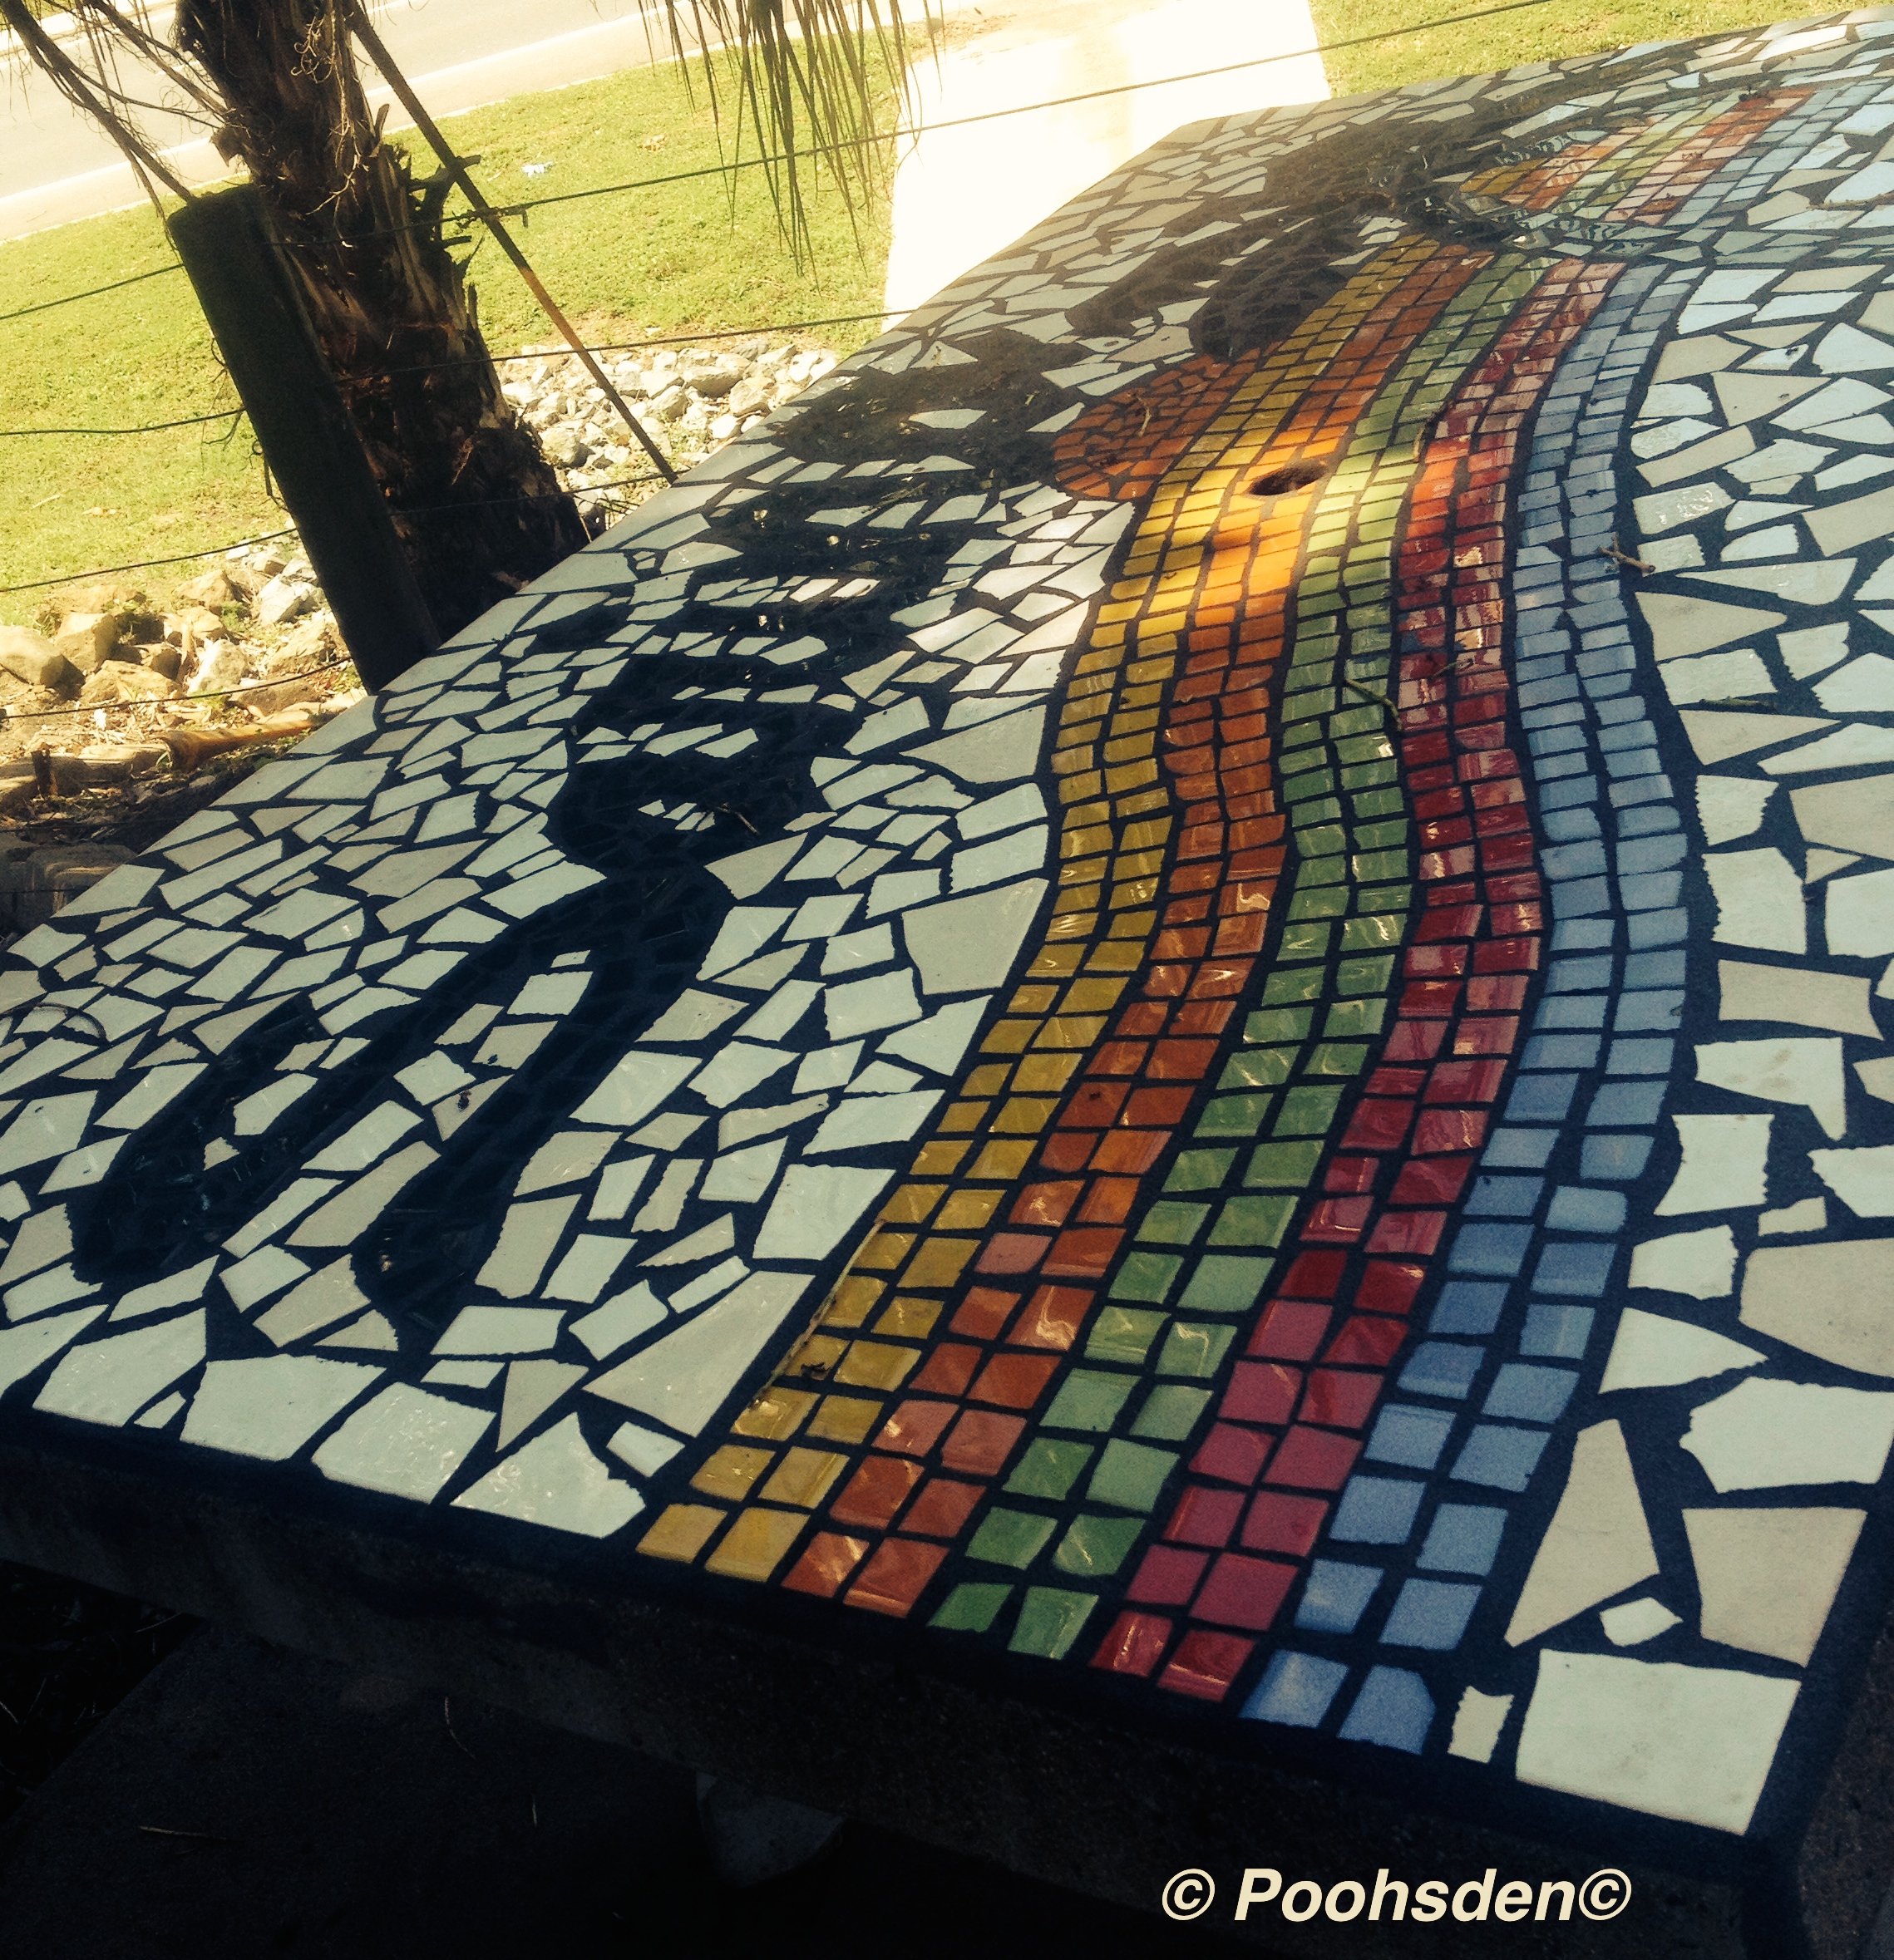 This mosaic at a park bench caught my eye